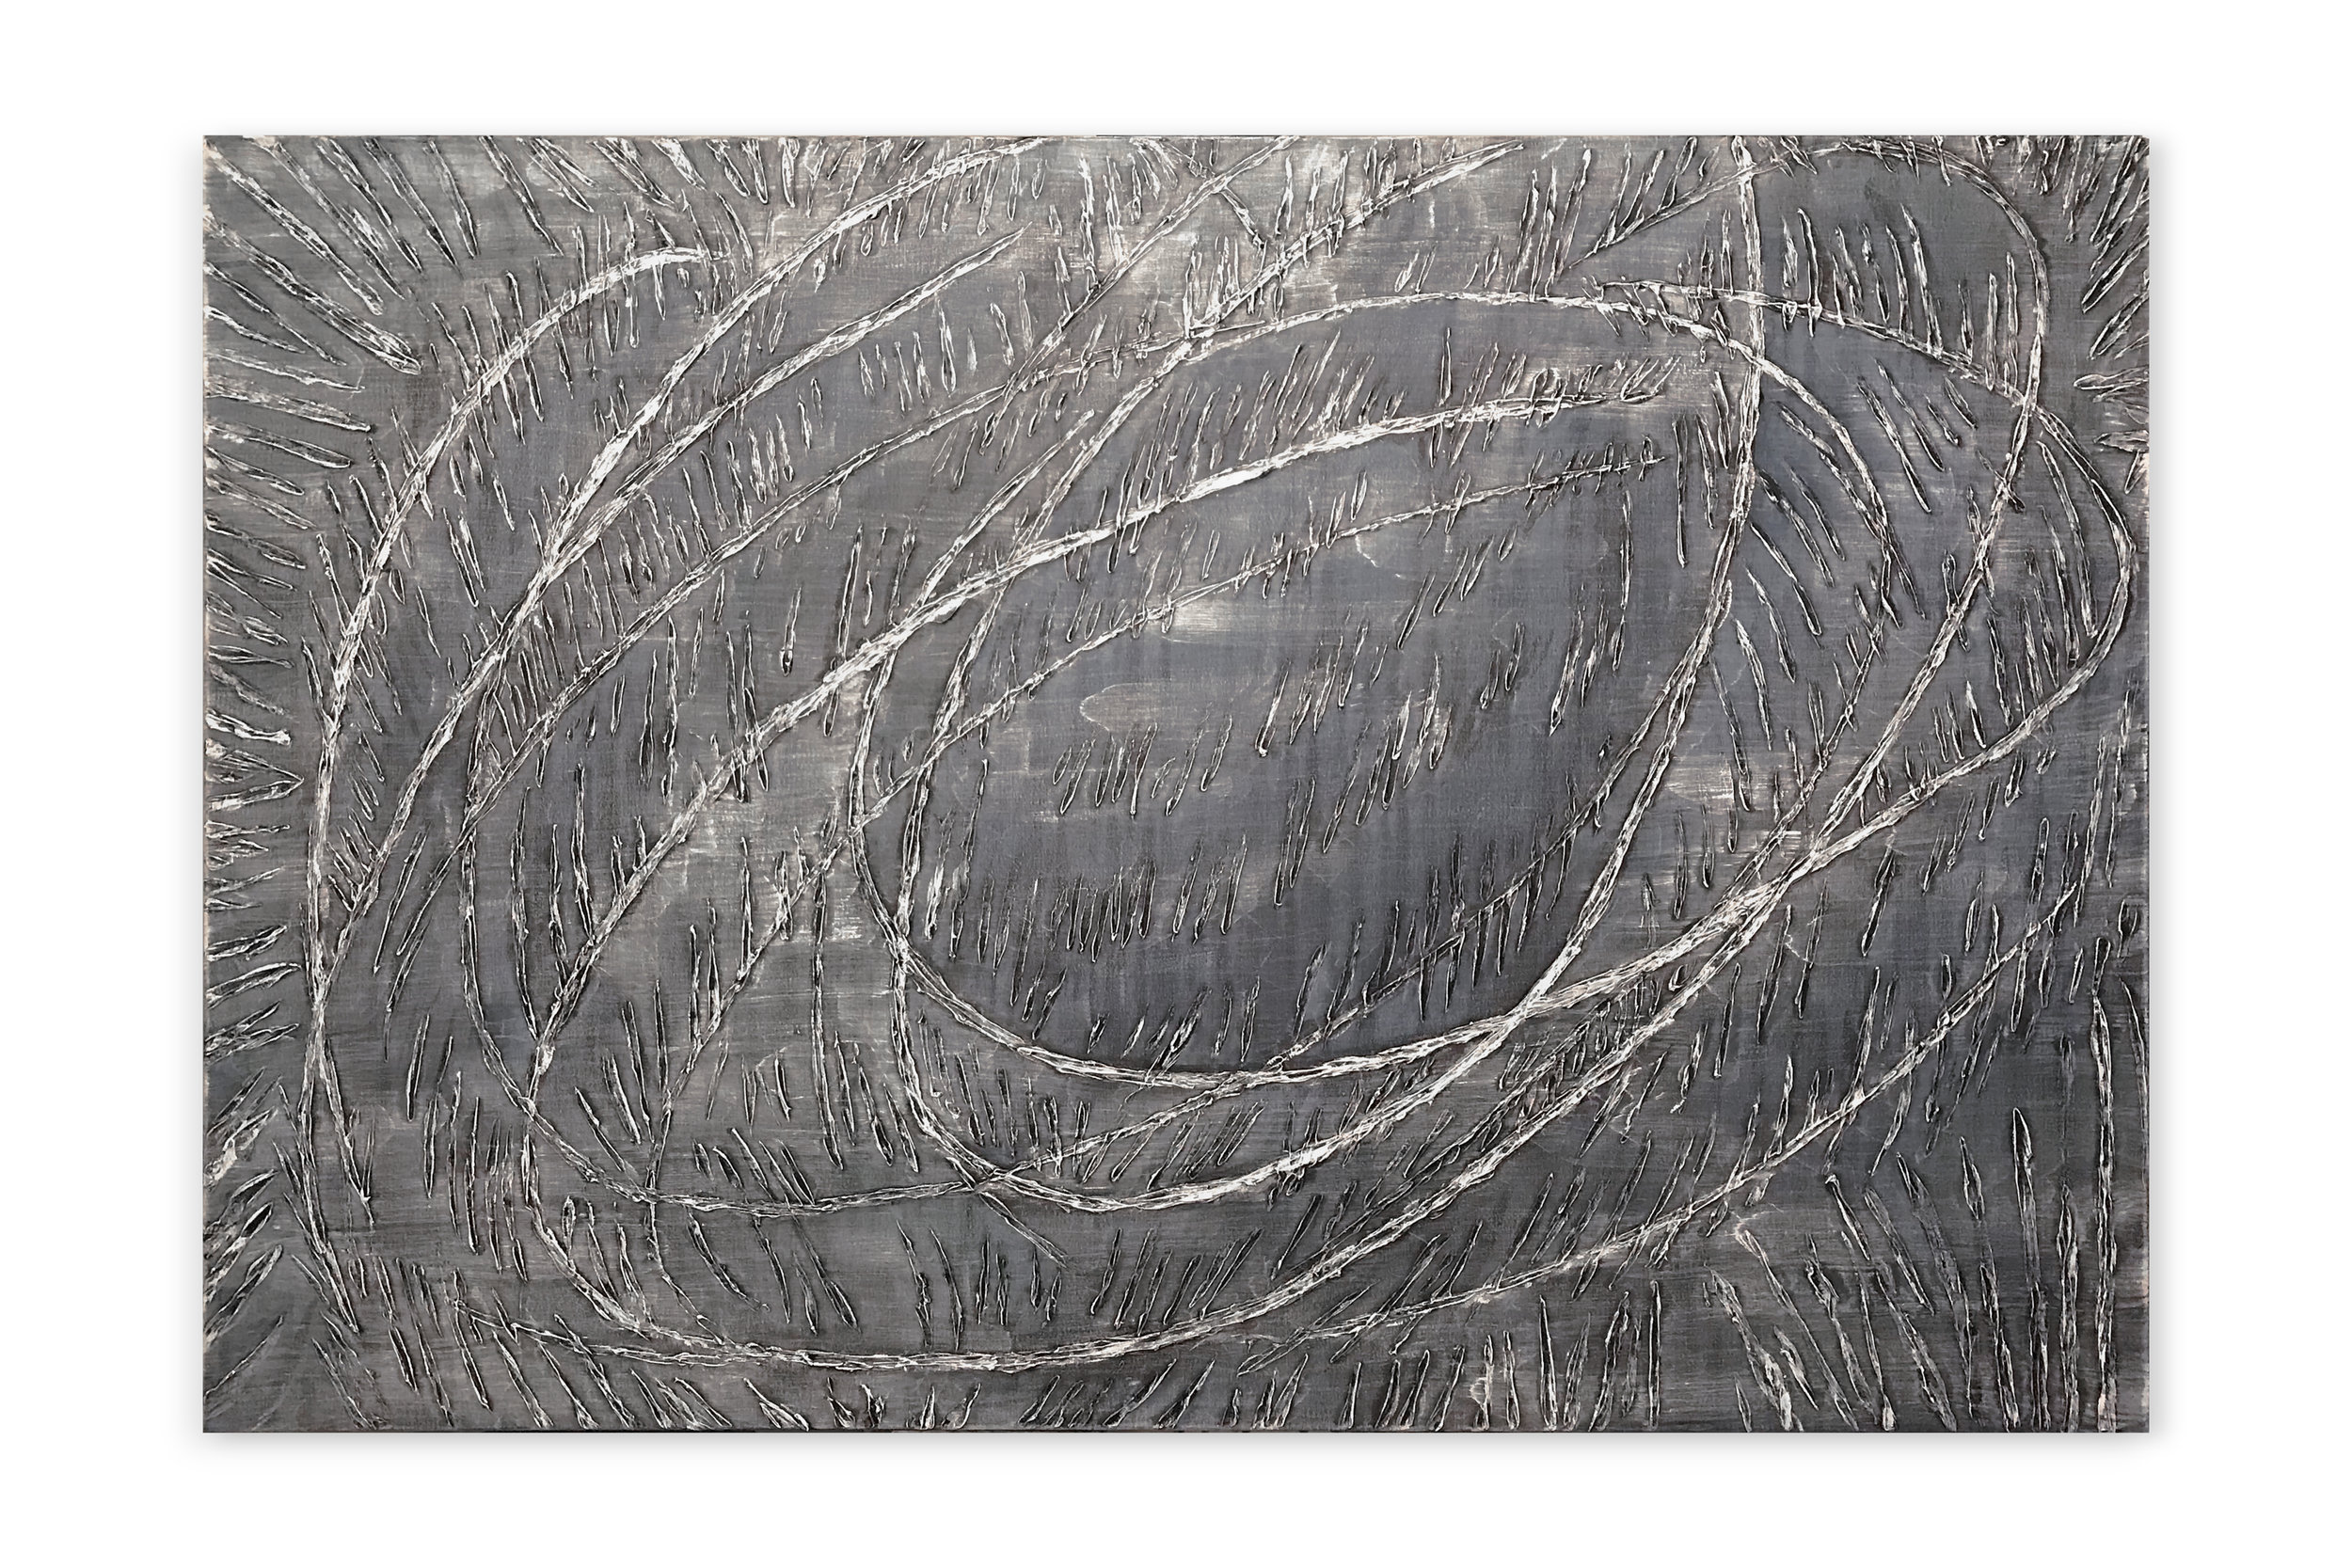  anthropocene  acrylic on canvas  48” x  72”  2018 